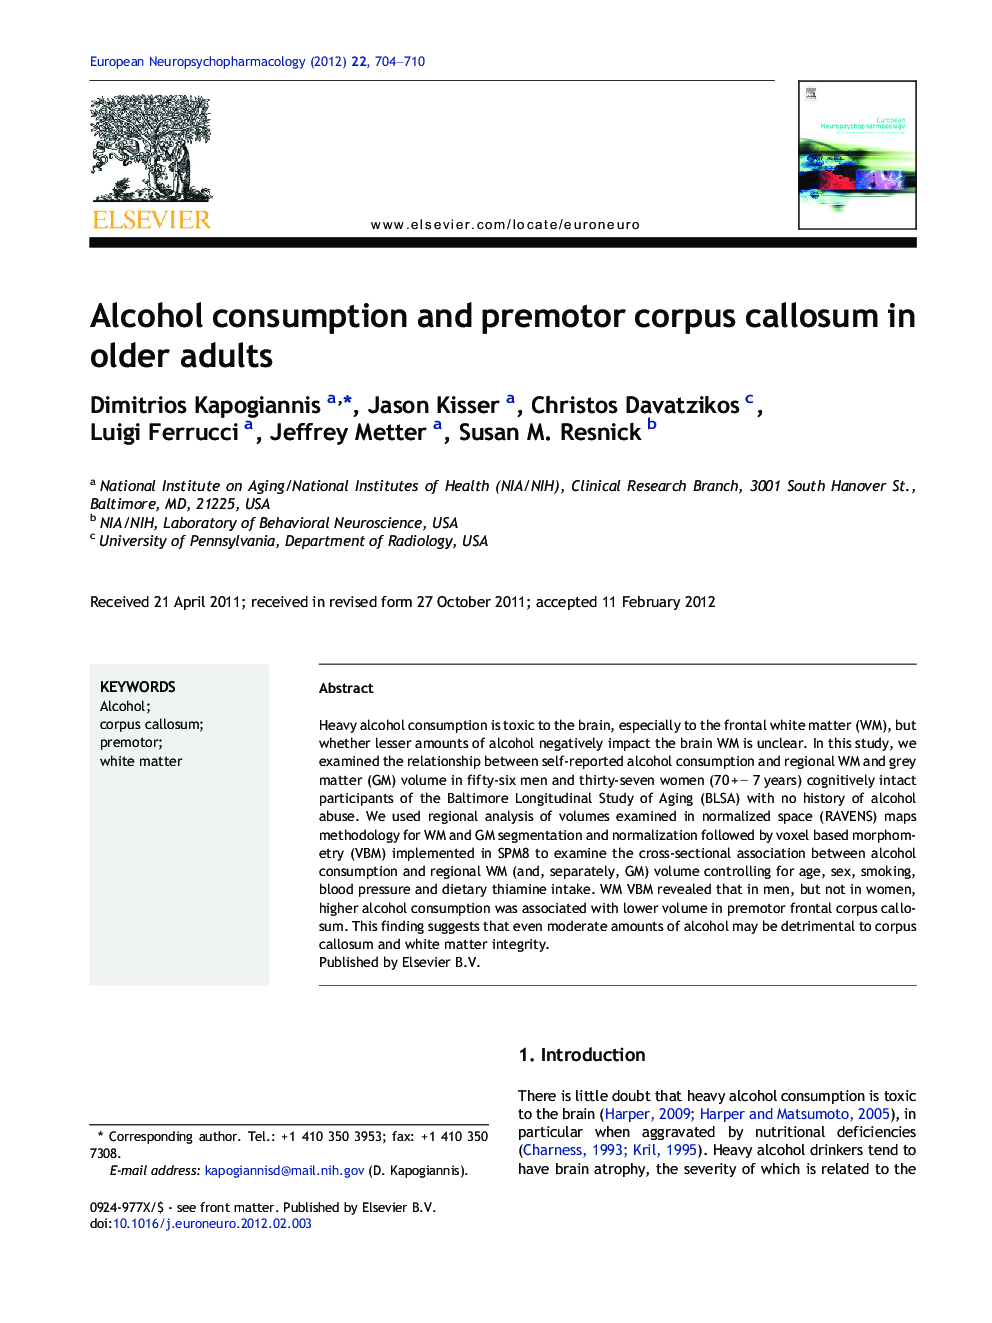 Alcohol consumption and premotor corpus callosum in older adults